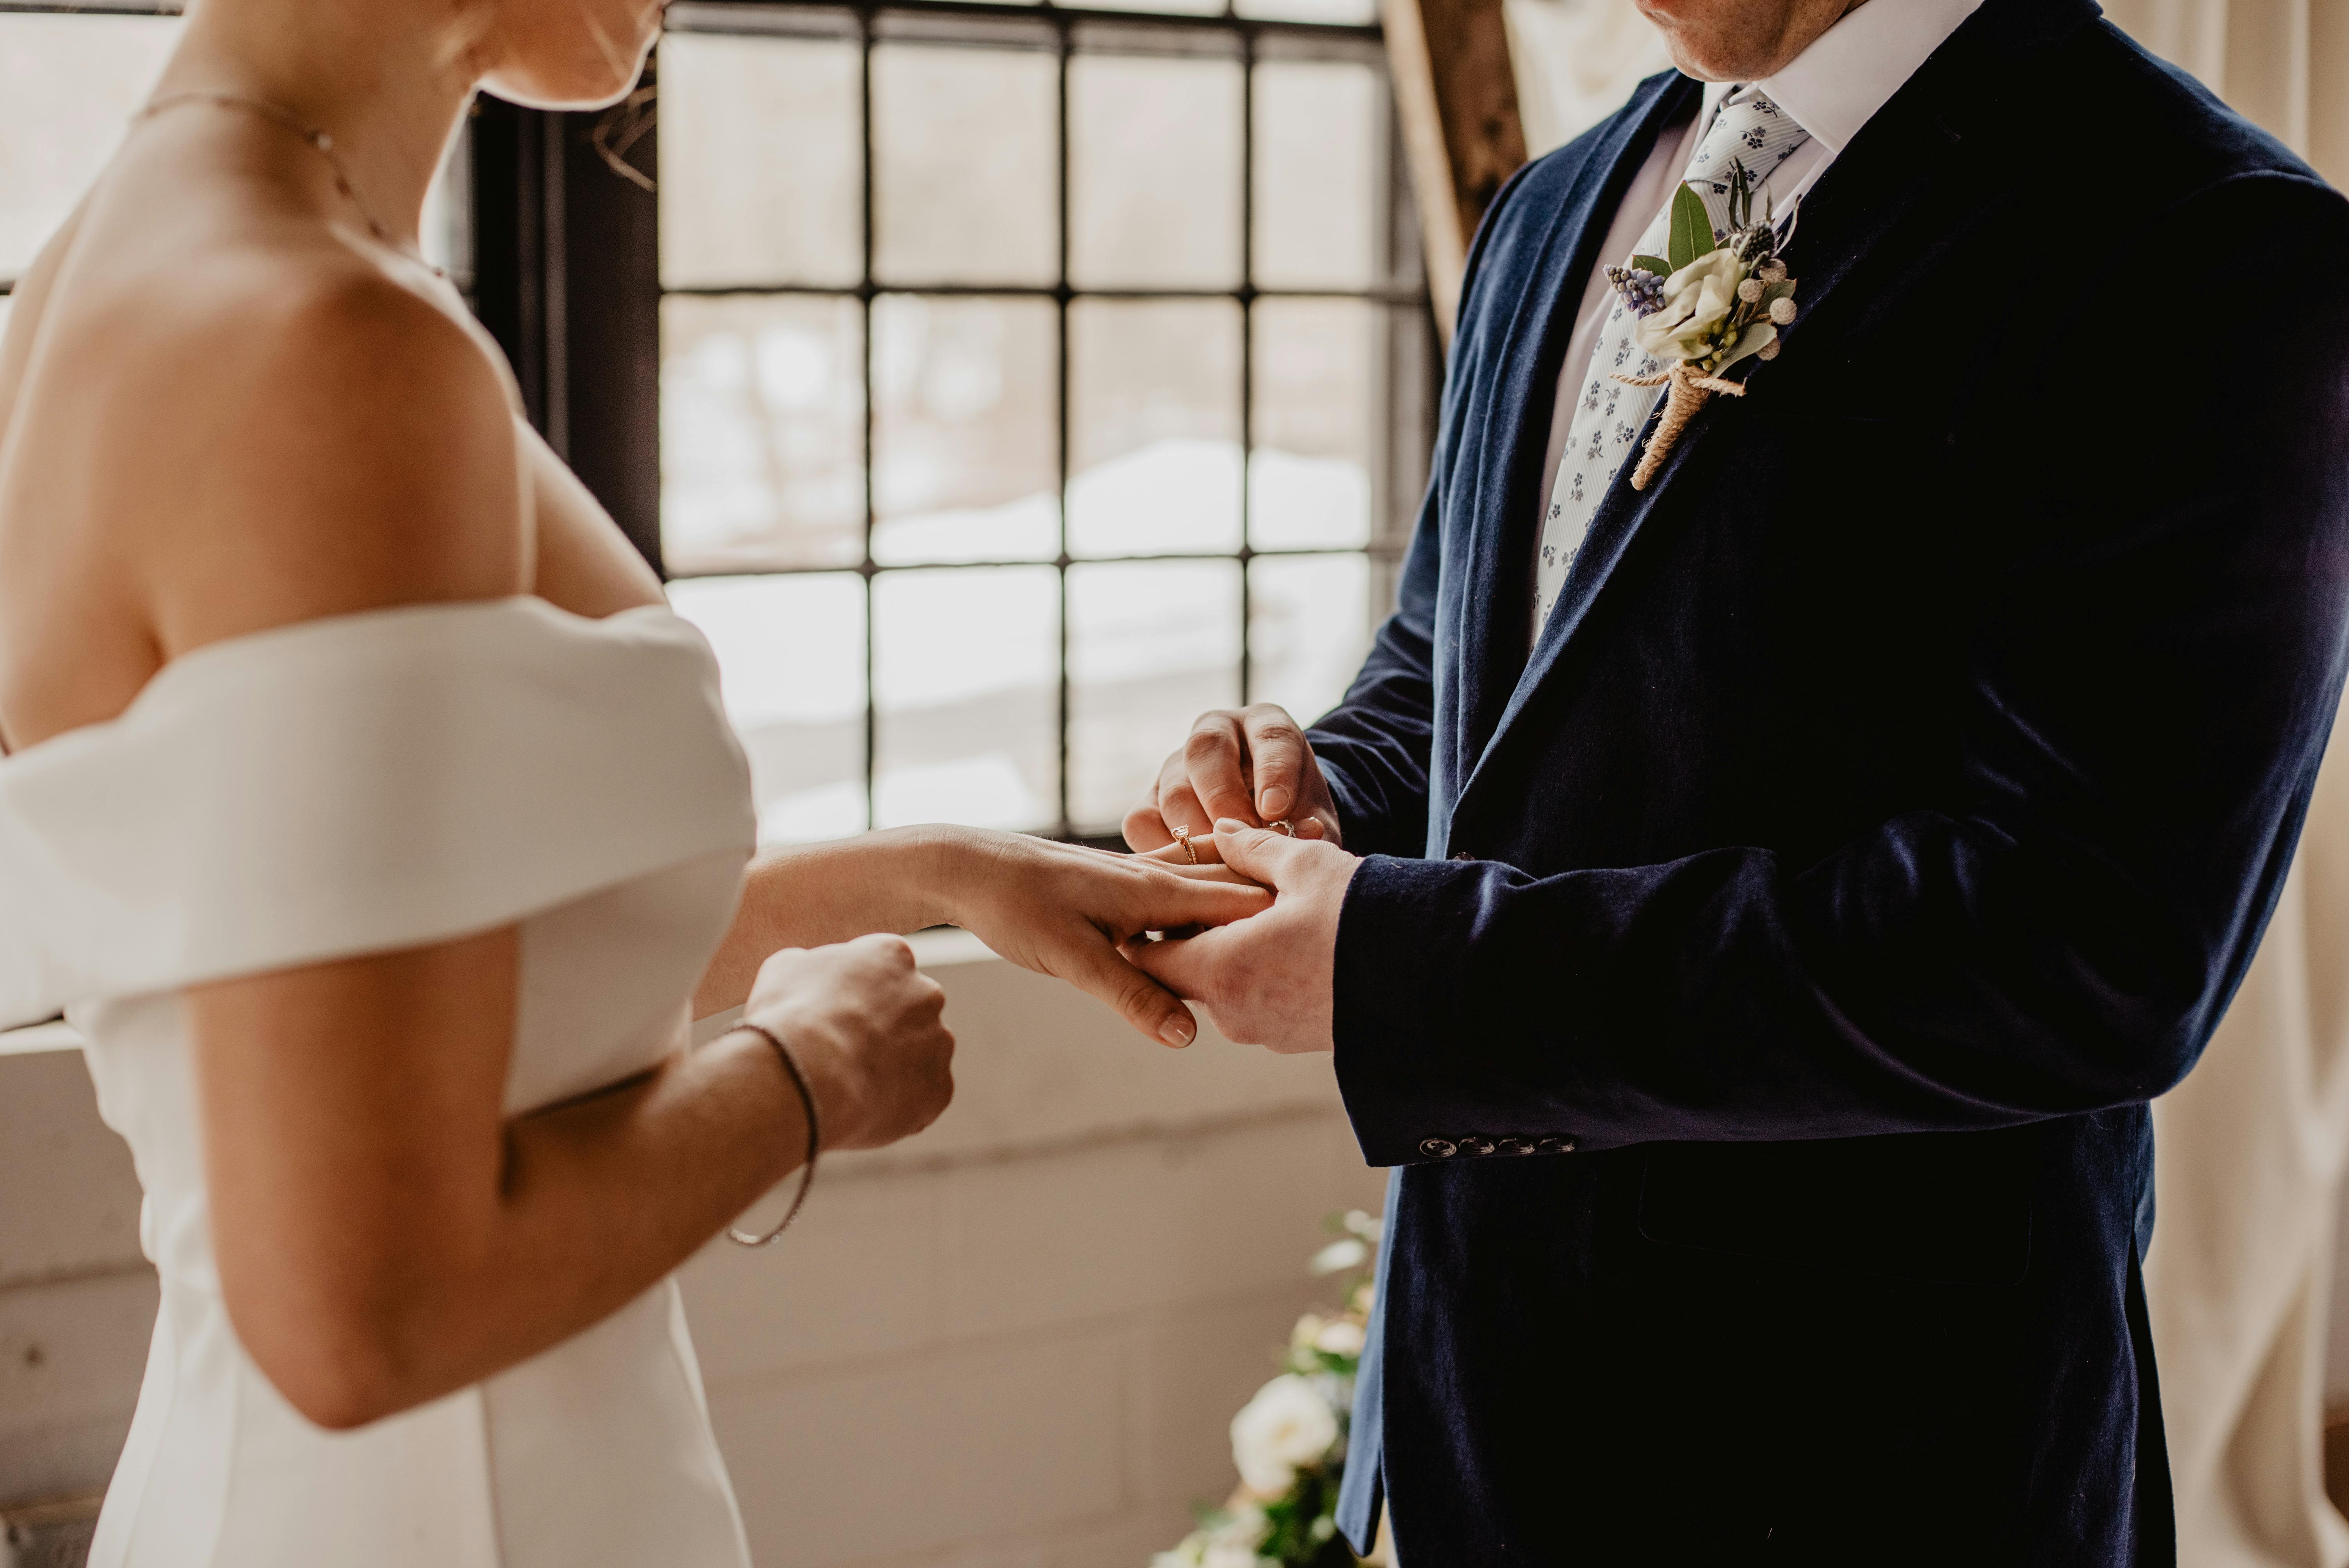 A bride and groom exchanging rings | Source: Pexels